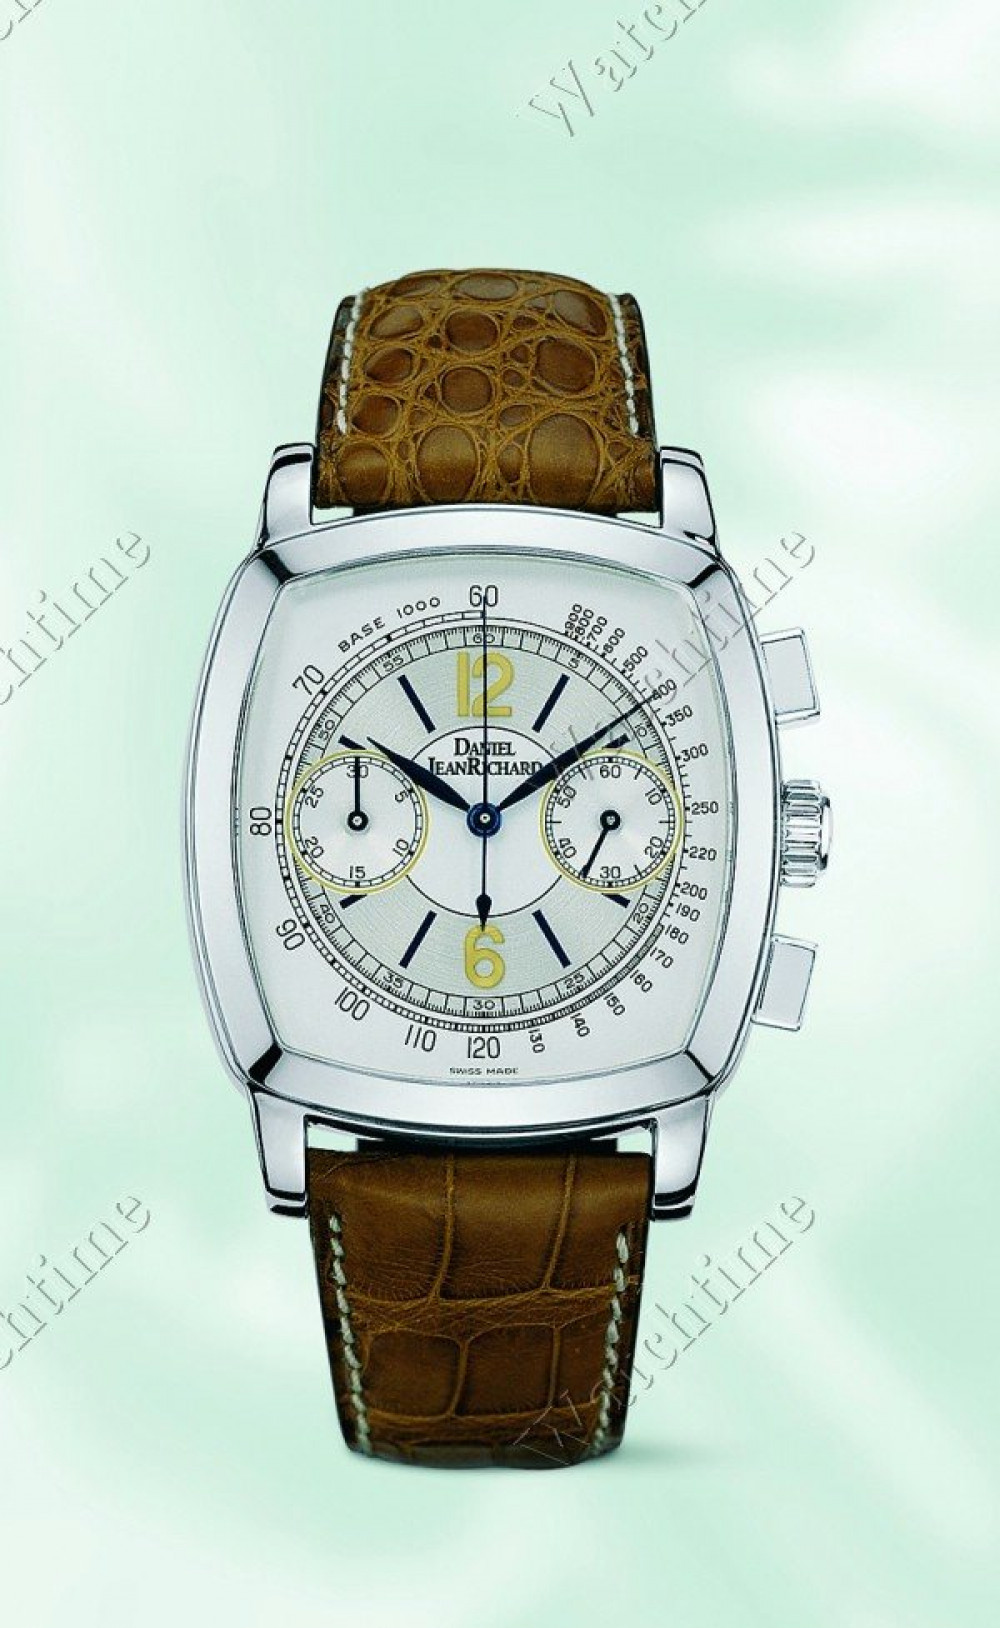 Zegarek firmy Jeanrichard, model Grand TV Screen Chronograph mit zwei Zählern